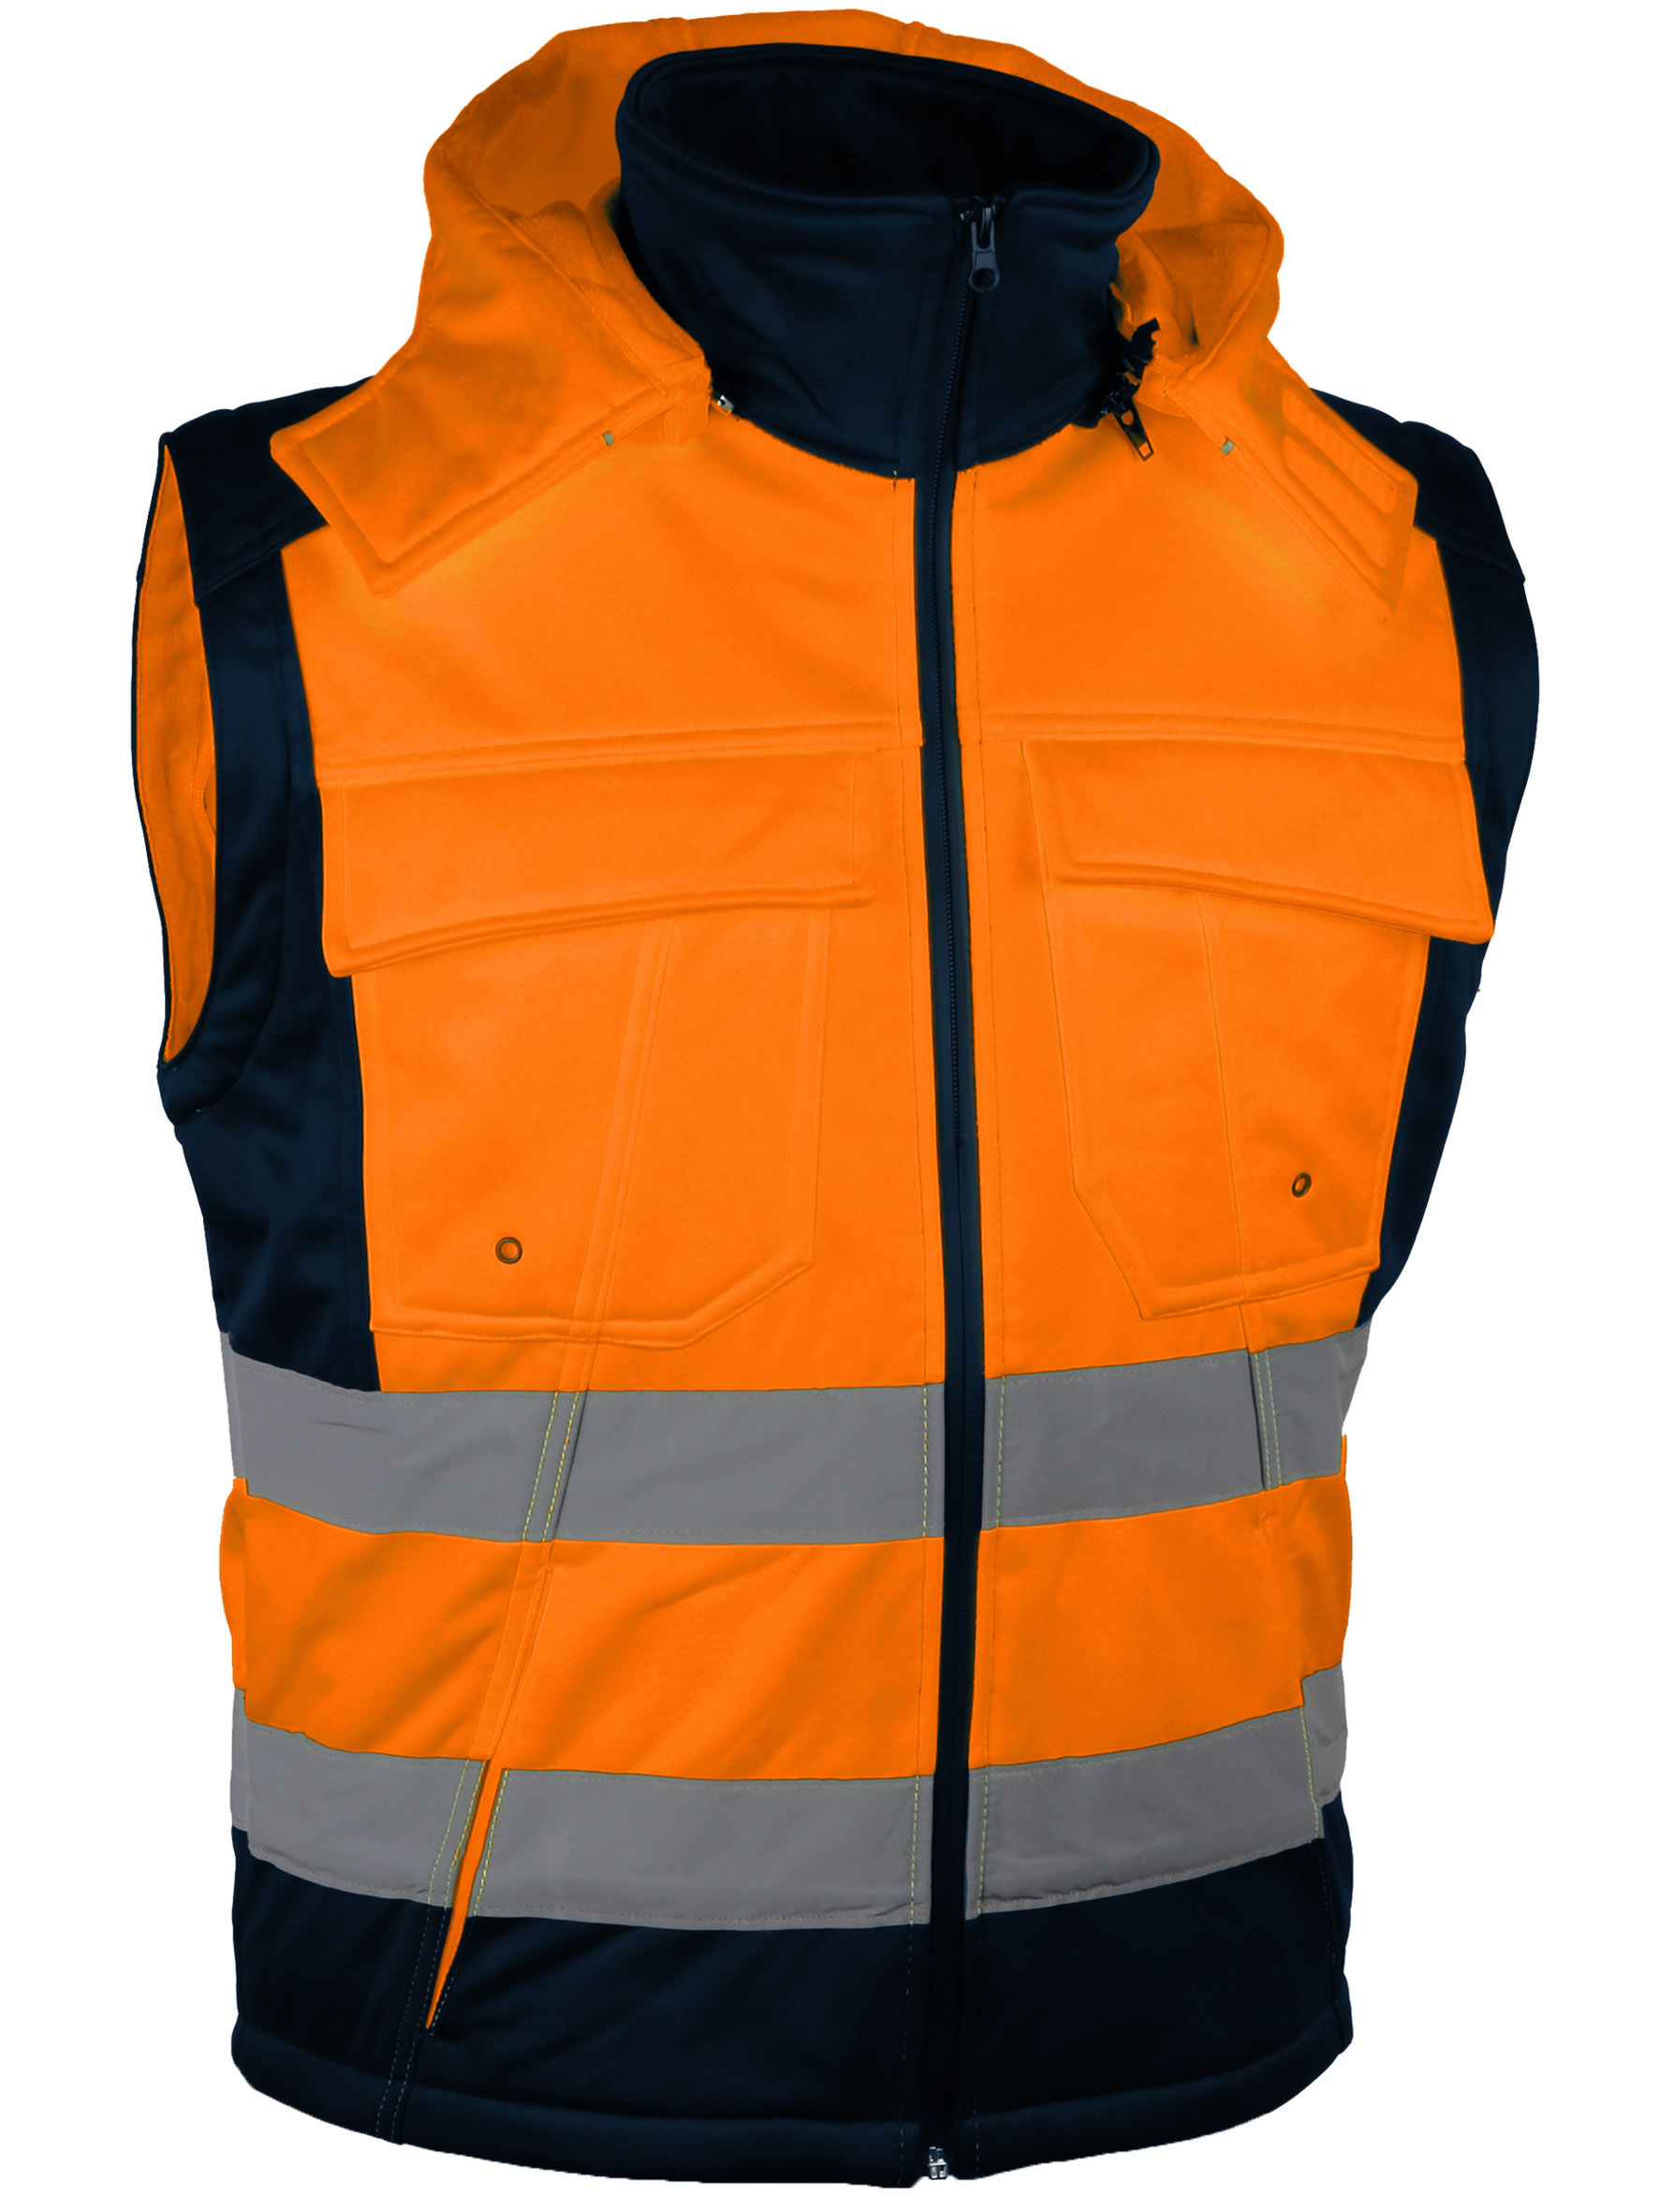 2 in 1 Softshell Warnschutzjacke Warnjacke Jacke Weste Orange Größe S-XXXL 